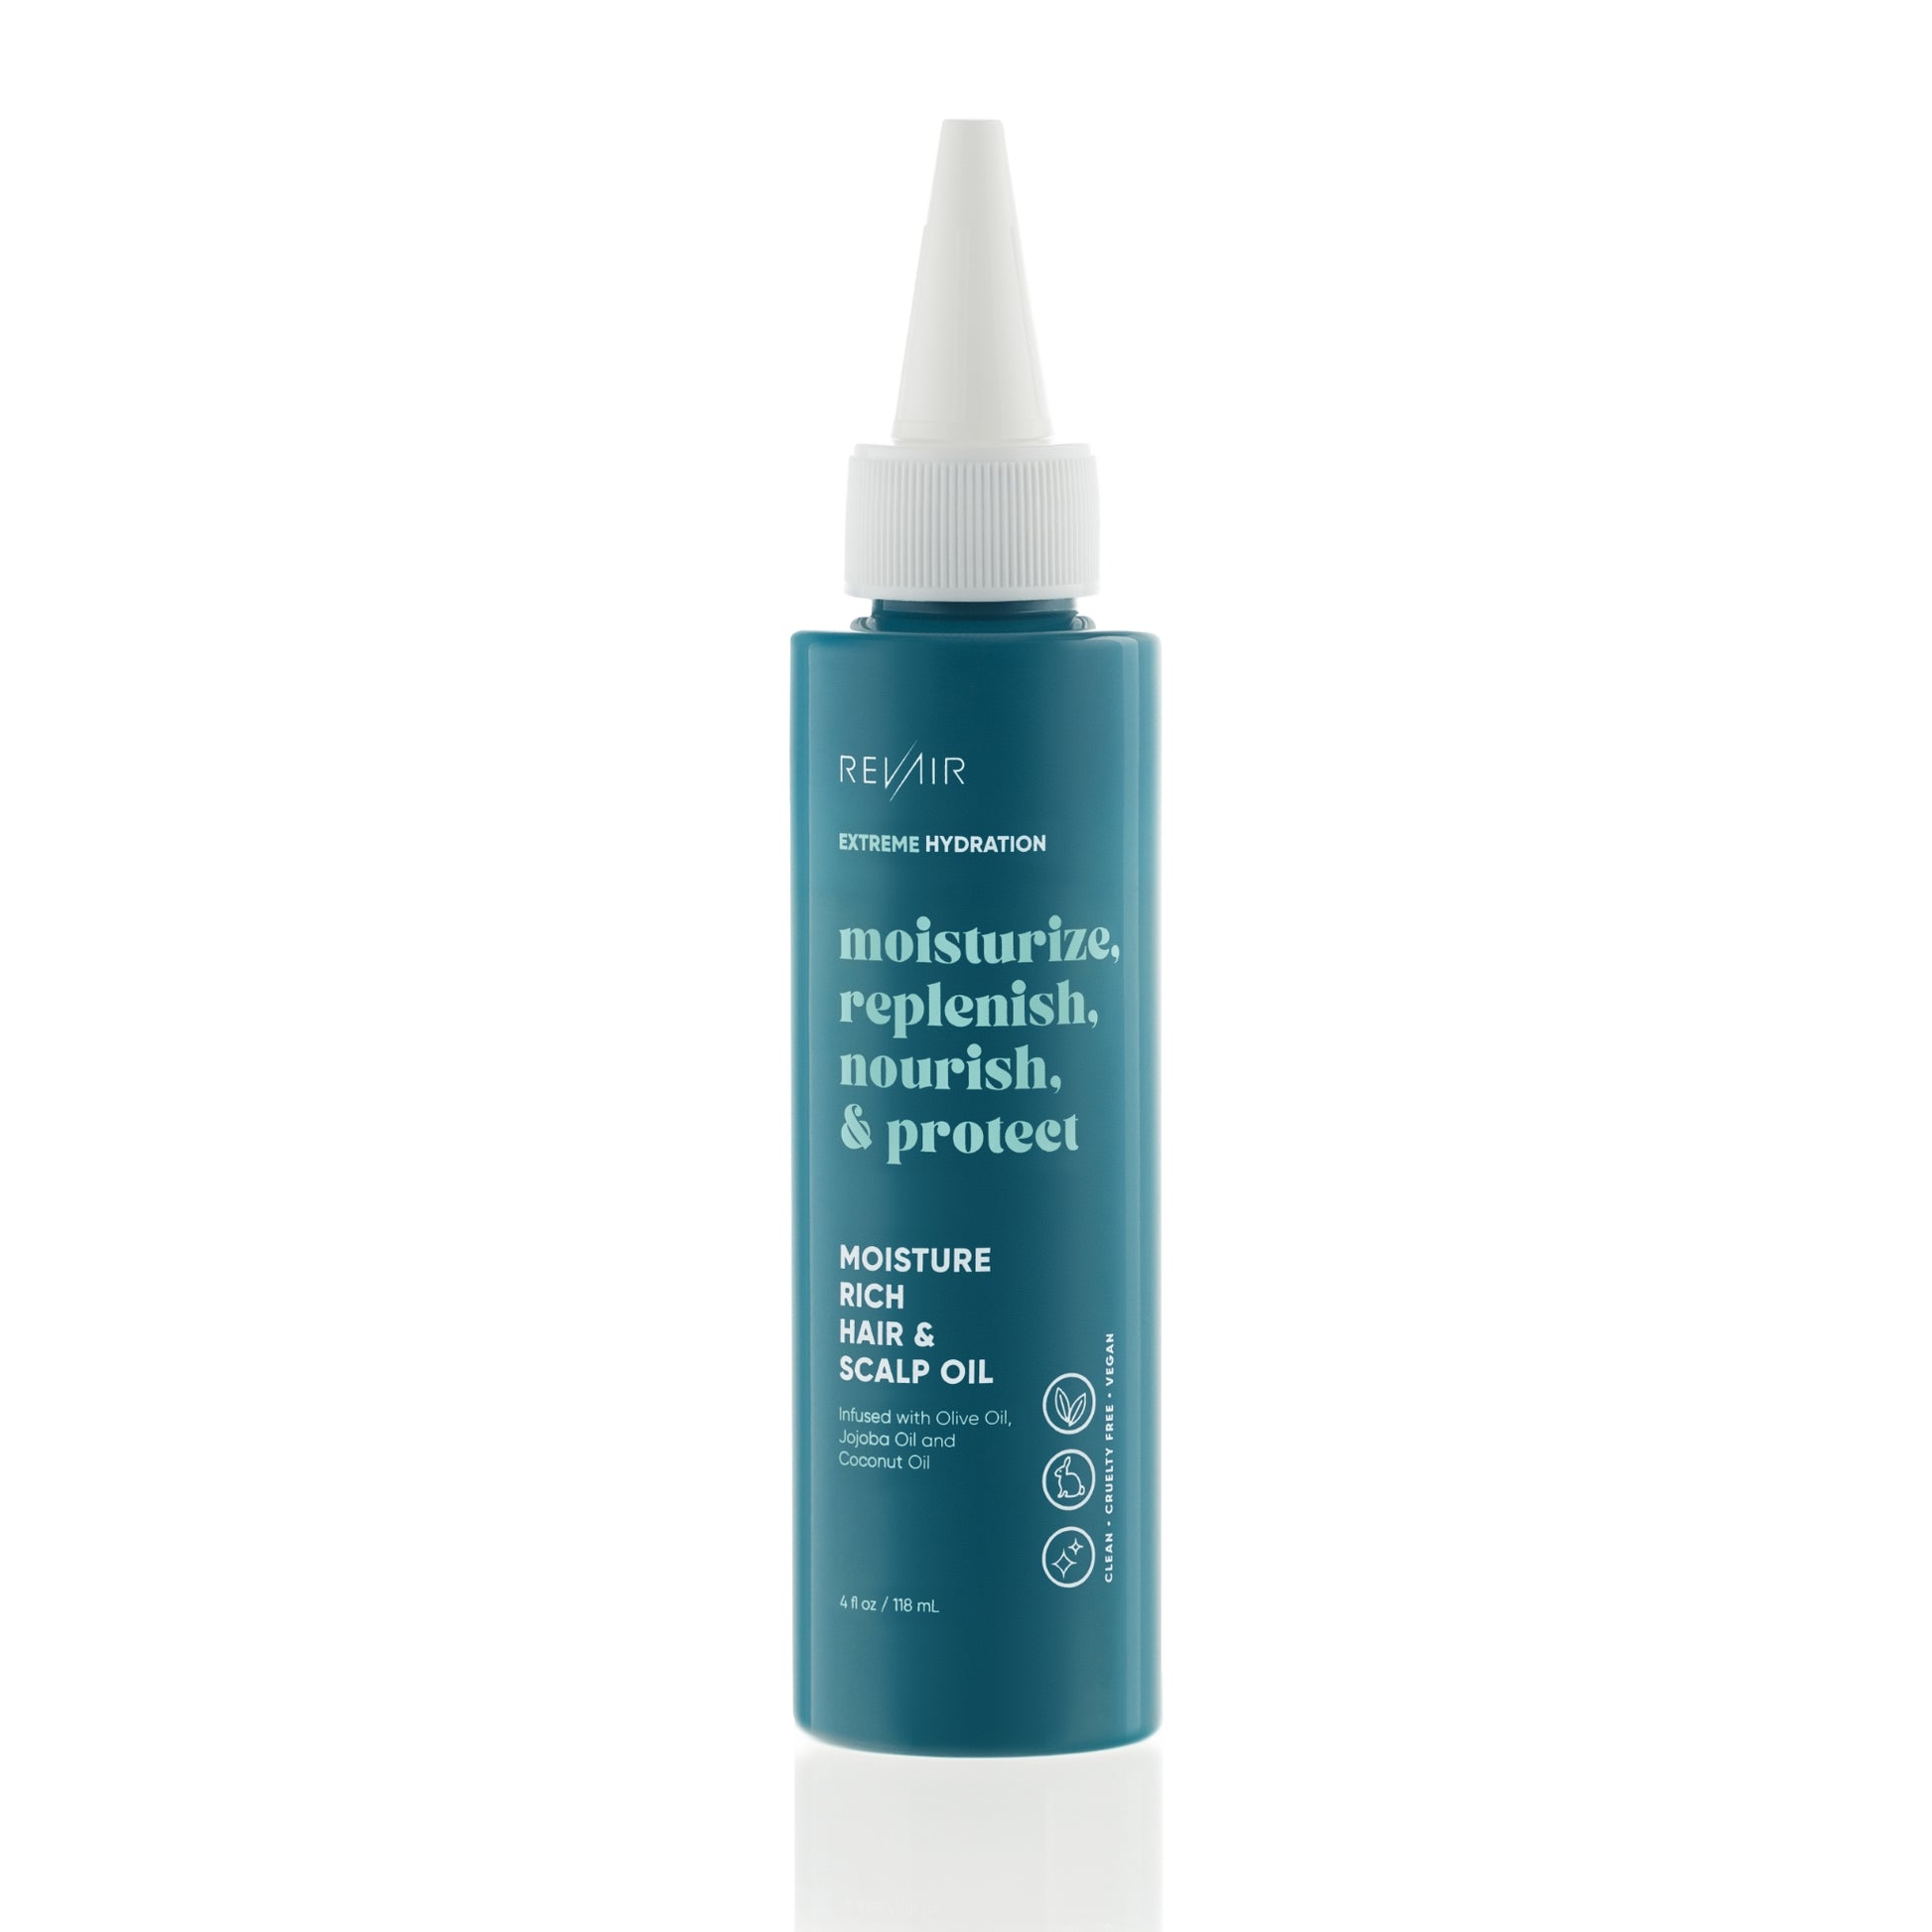 Moisturize, replenish, nourish, and protect - RevAir moisture rich hair and scalp oil 4 ounce bottle